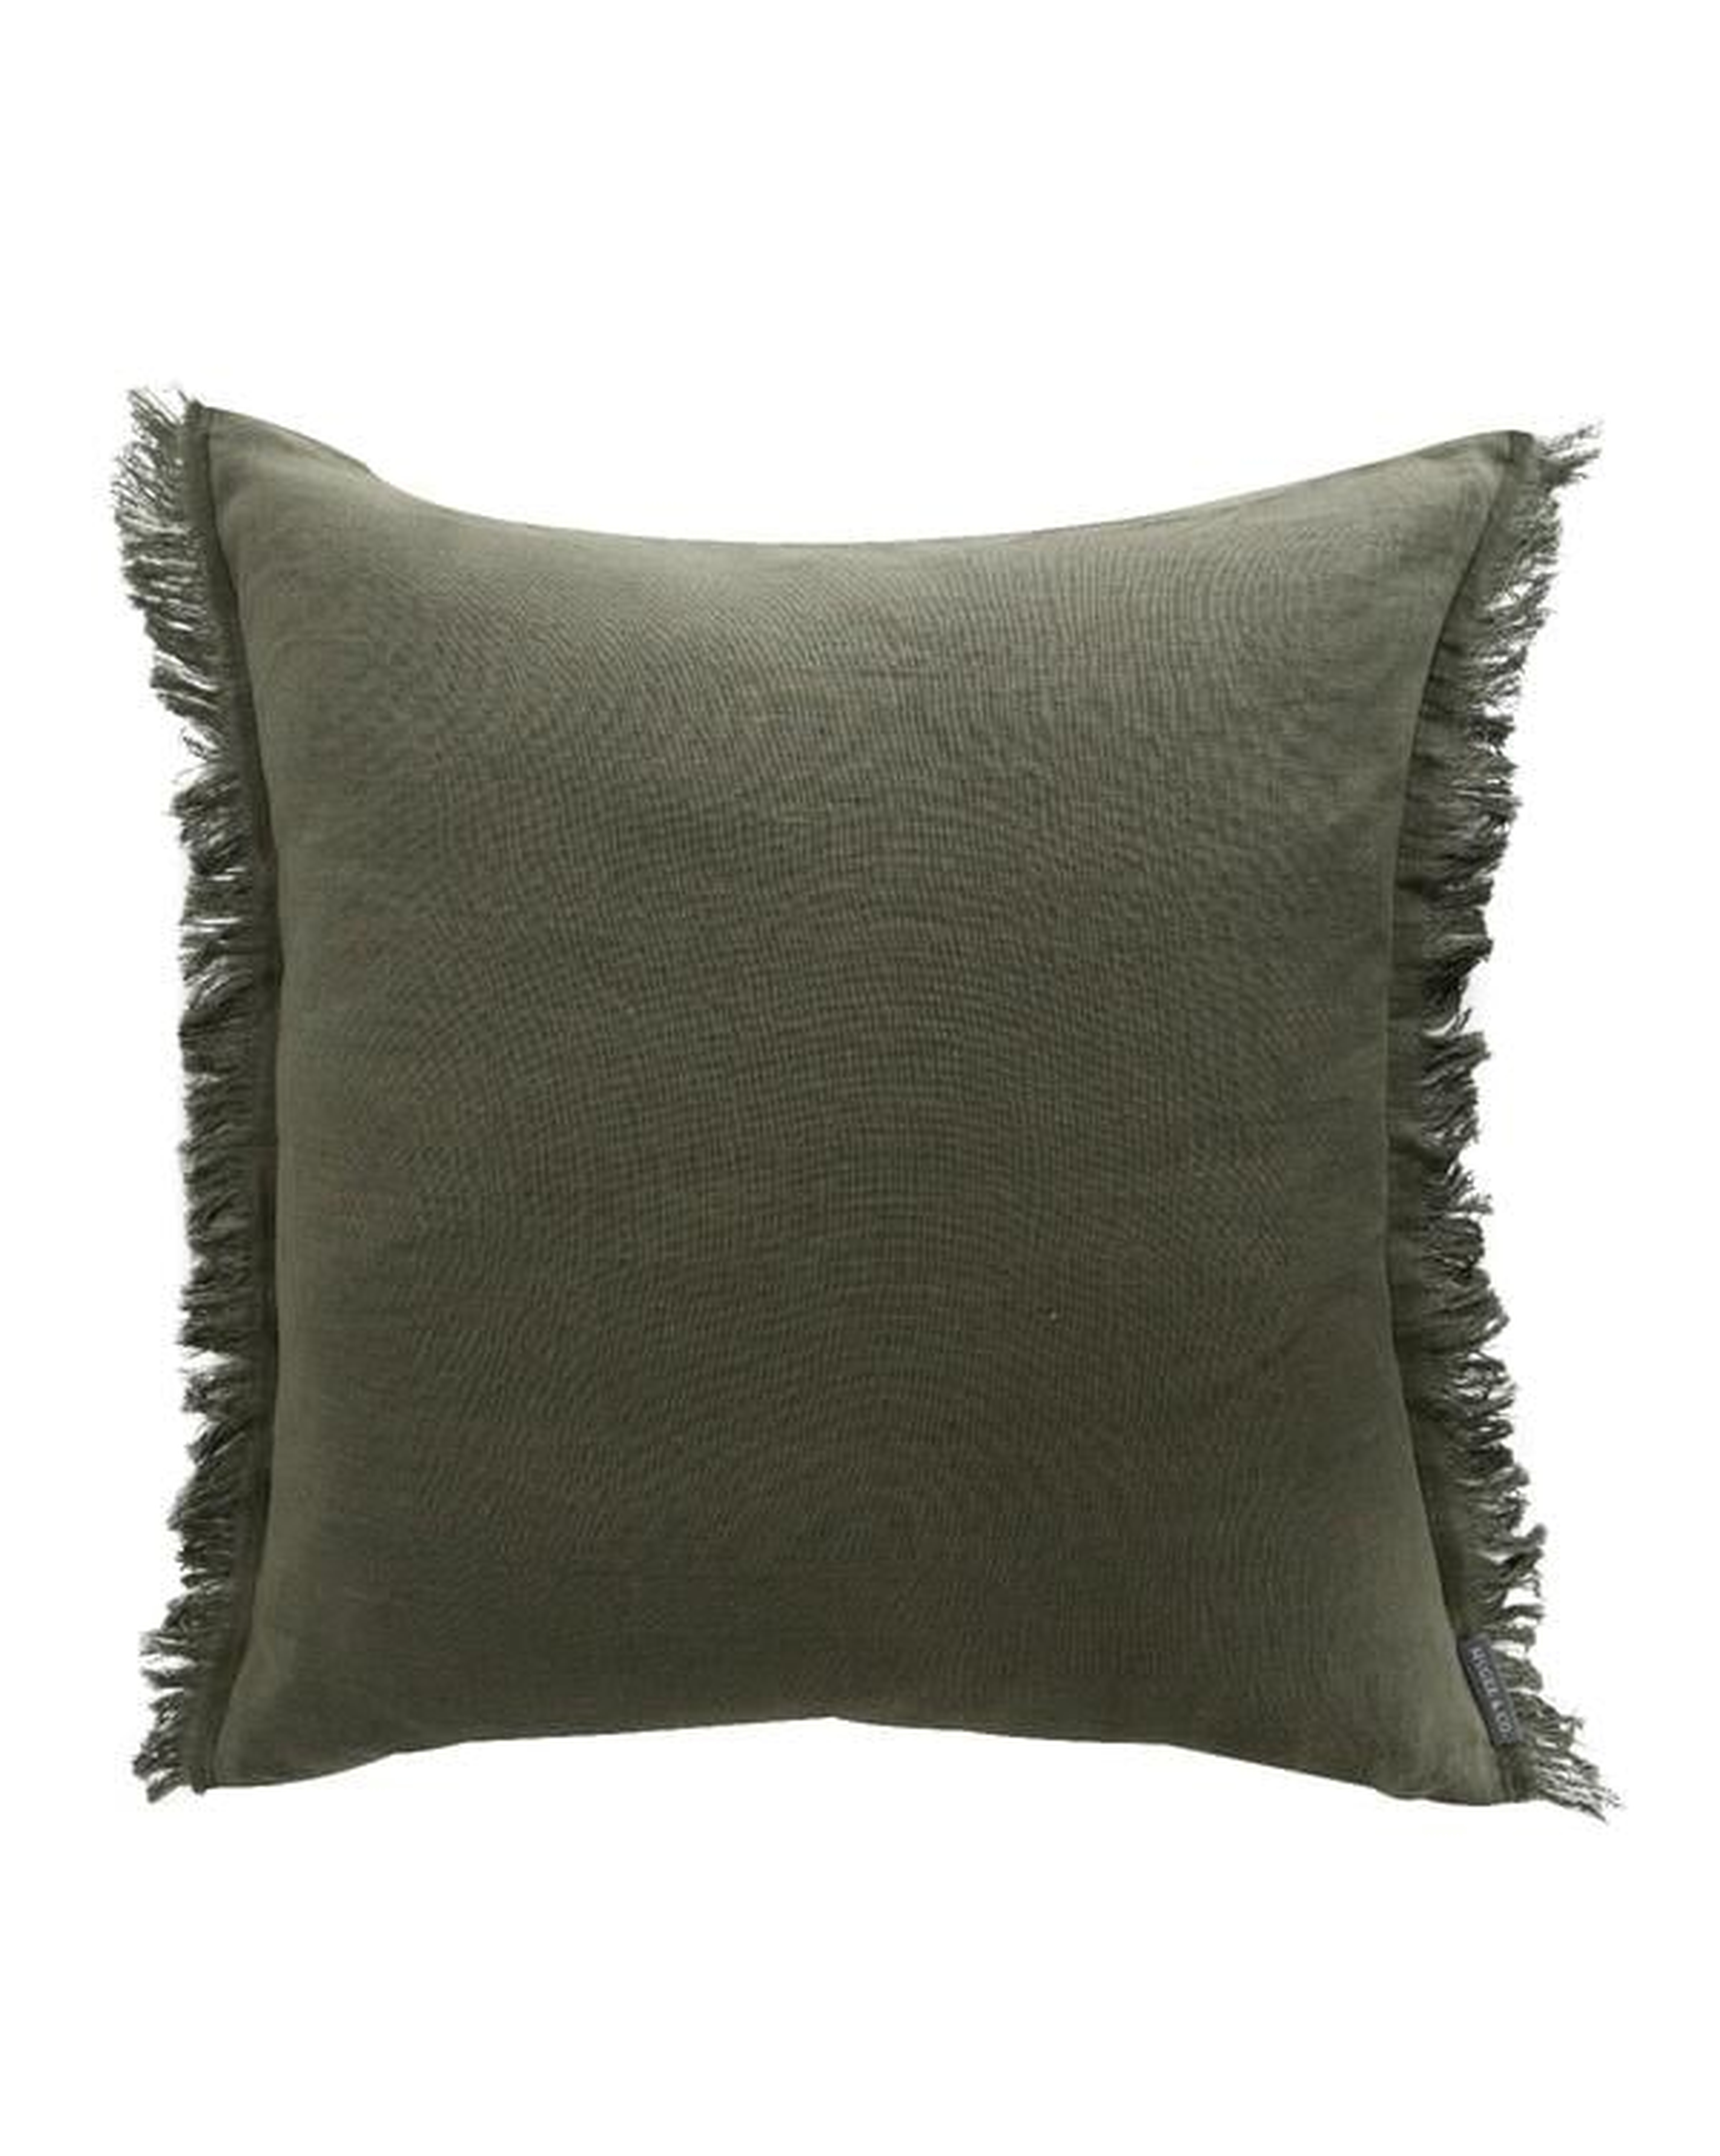 Hazelton Pine Fringed Pillow Cover, 24" x 24" - McGee & Co.